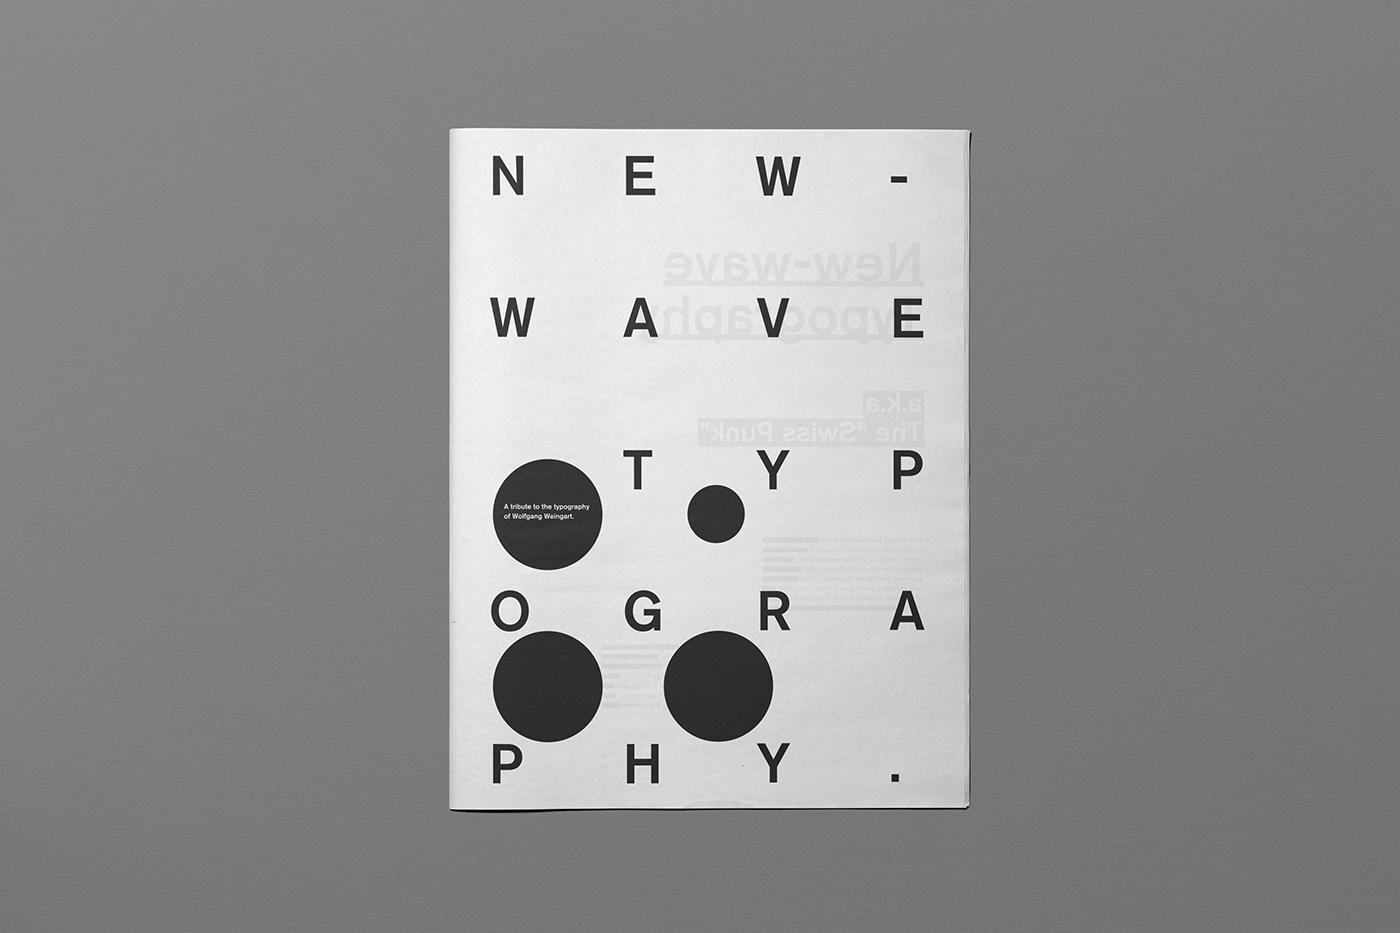 spread Wolfgang Weingart Zine  swiss Style newsprint typography   swiss punk new wave typography